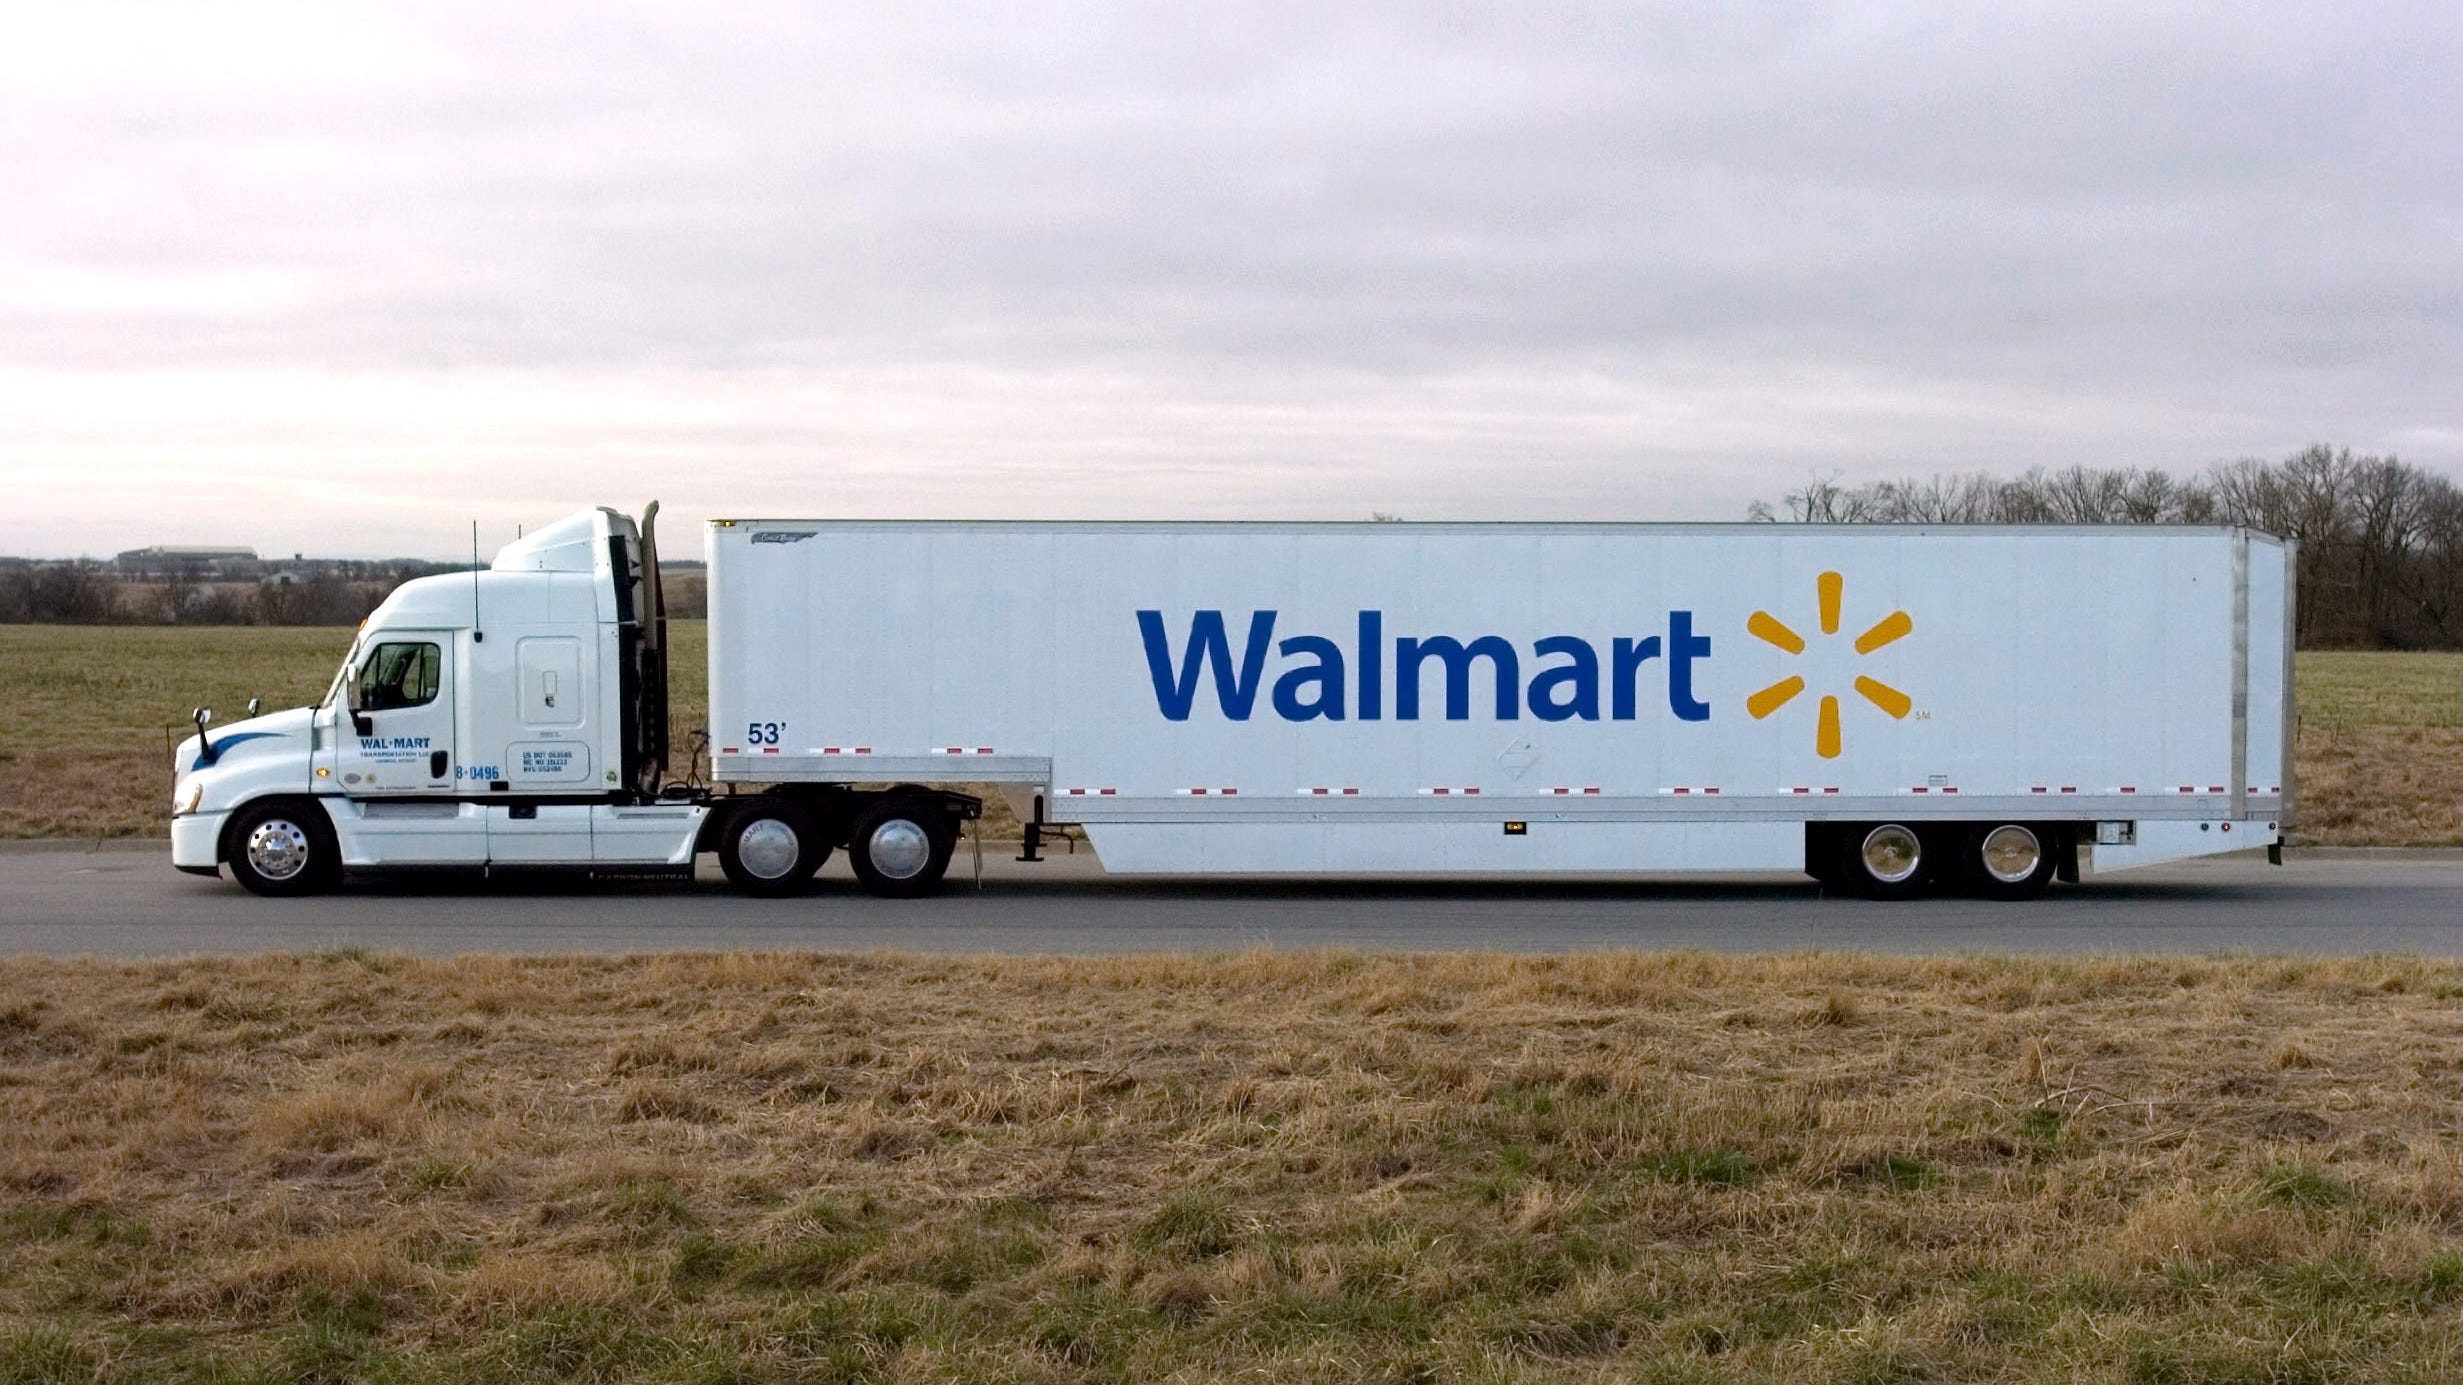 In Iowa, Walmart truck drivers can make 87,500 — more than accountants